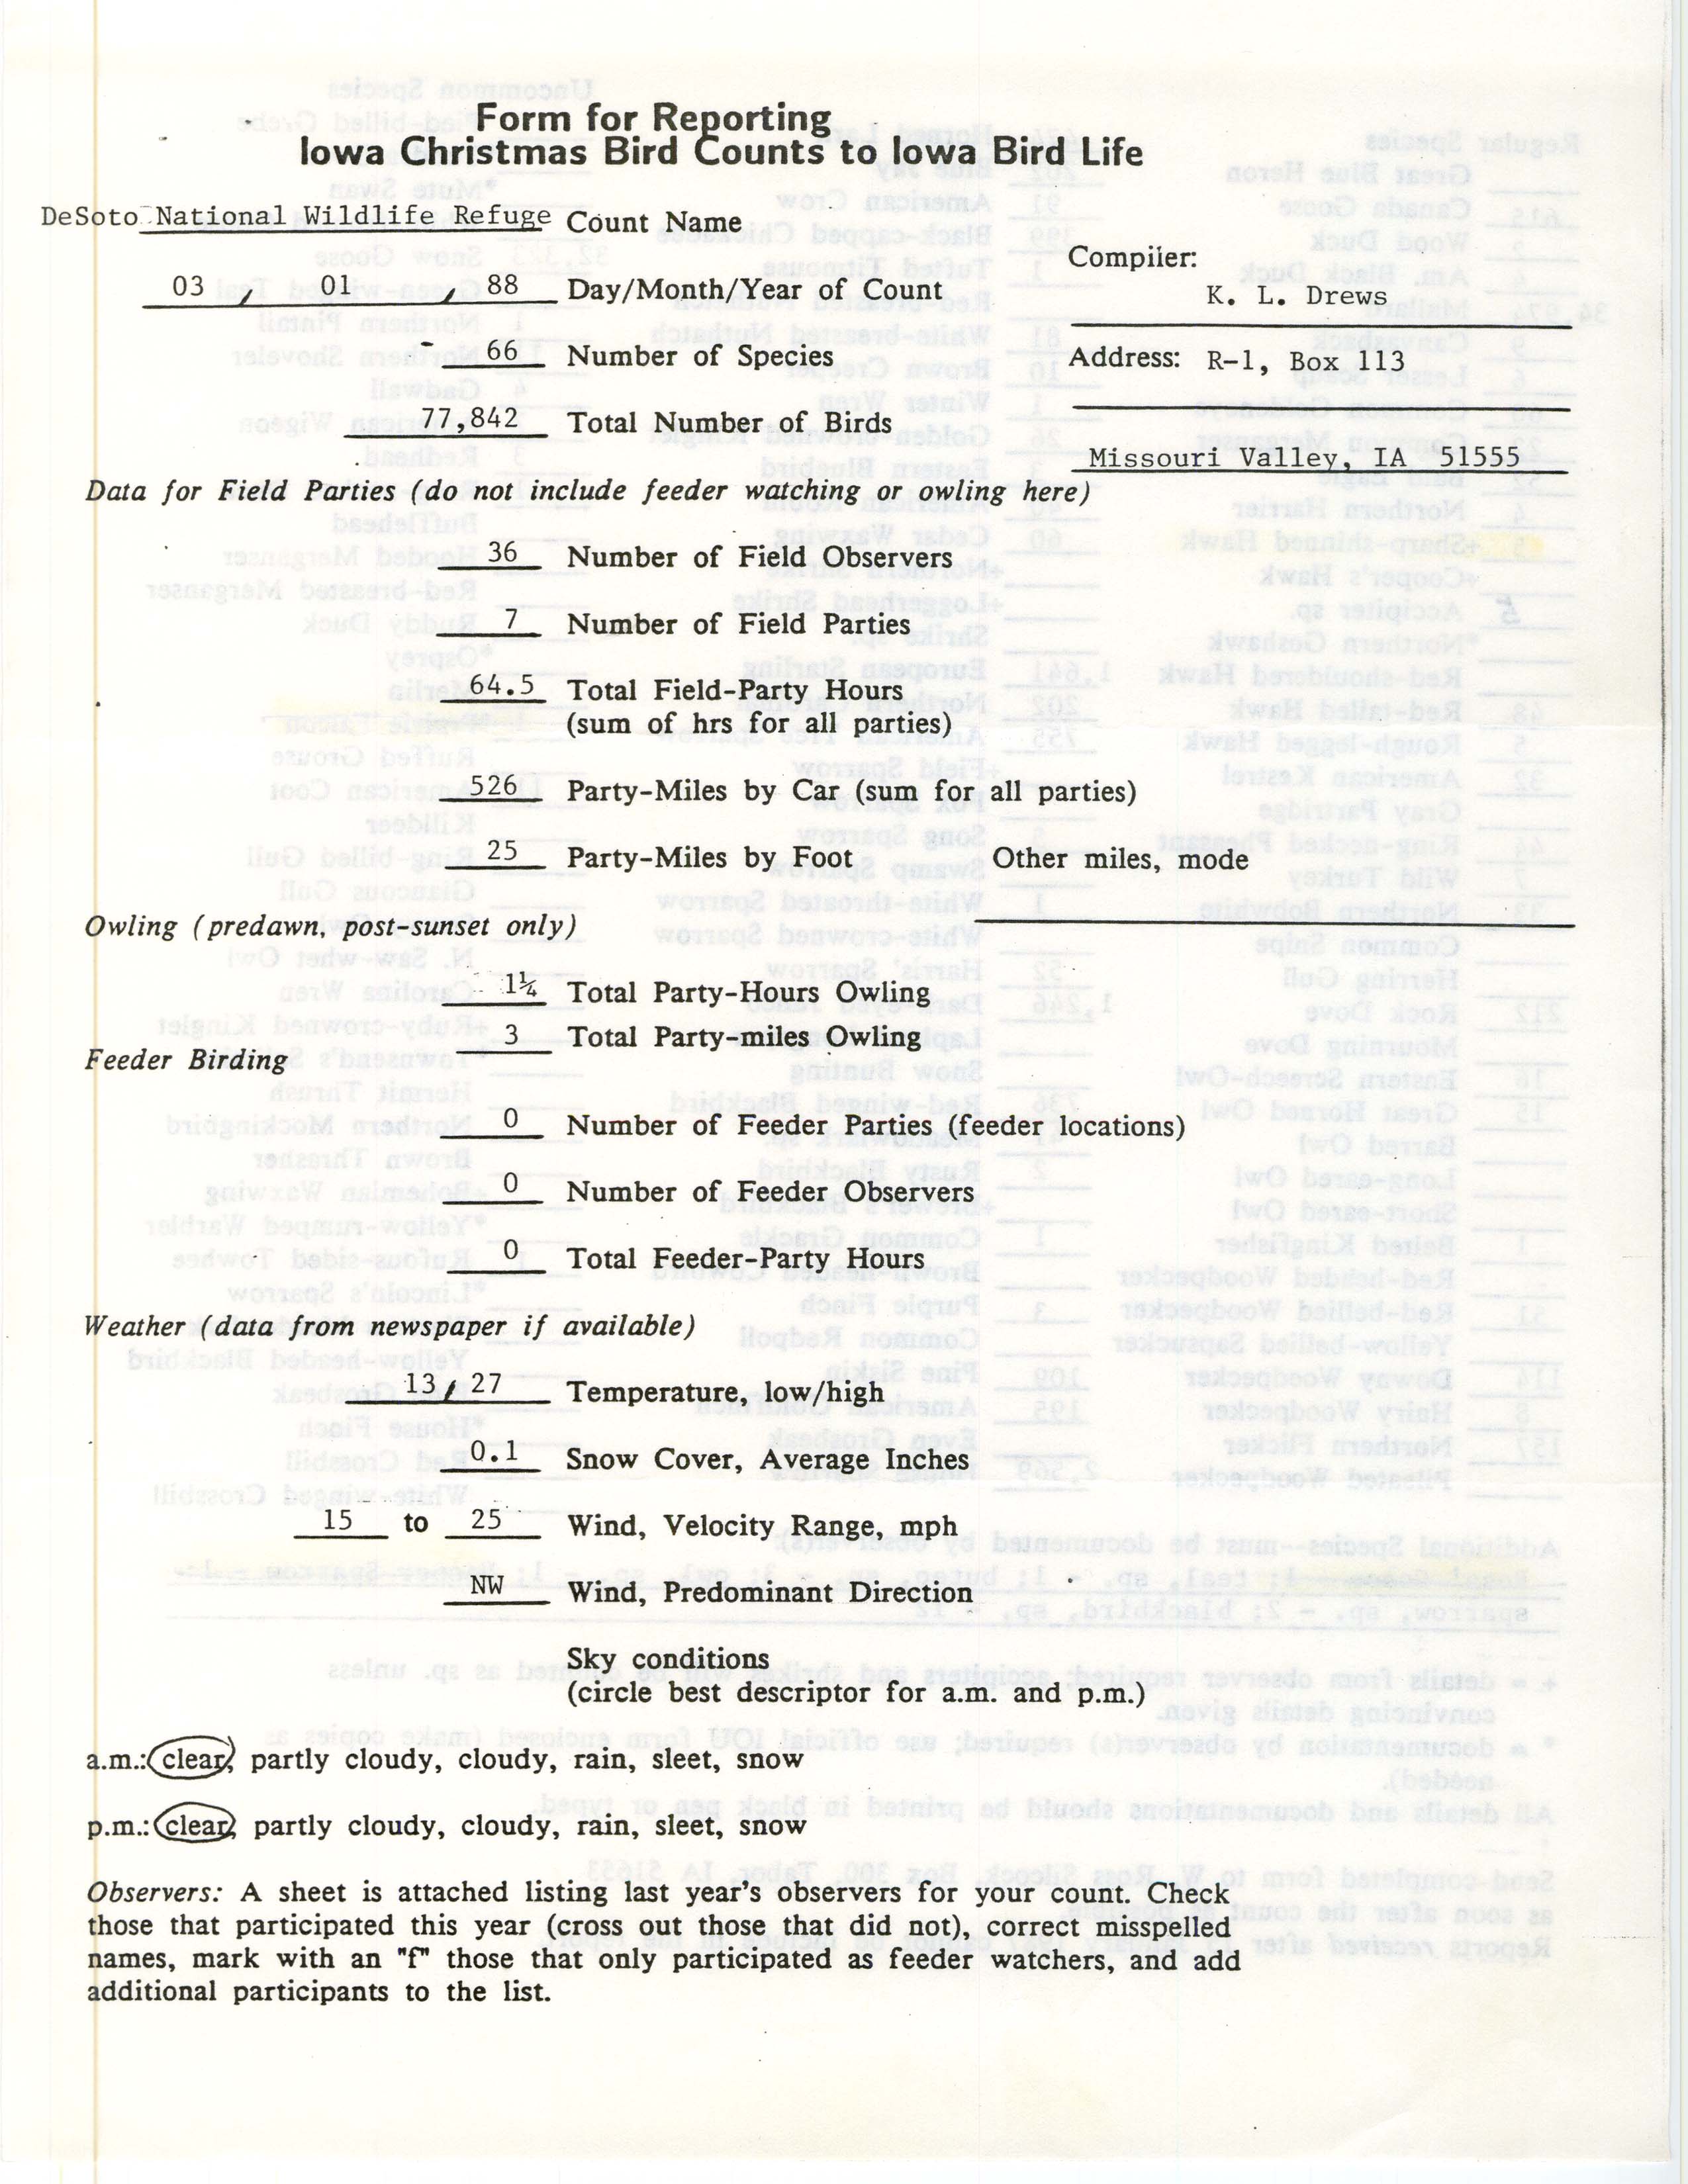 Form for reporting Iowa Christmas bird counts to Iowa Bird Life, K. L. Drews, January 3, 1988